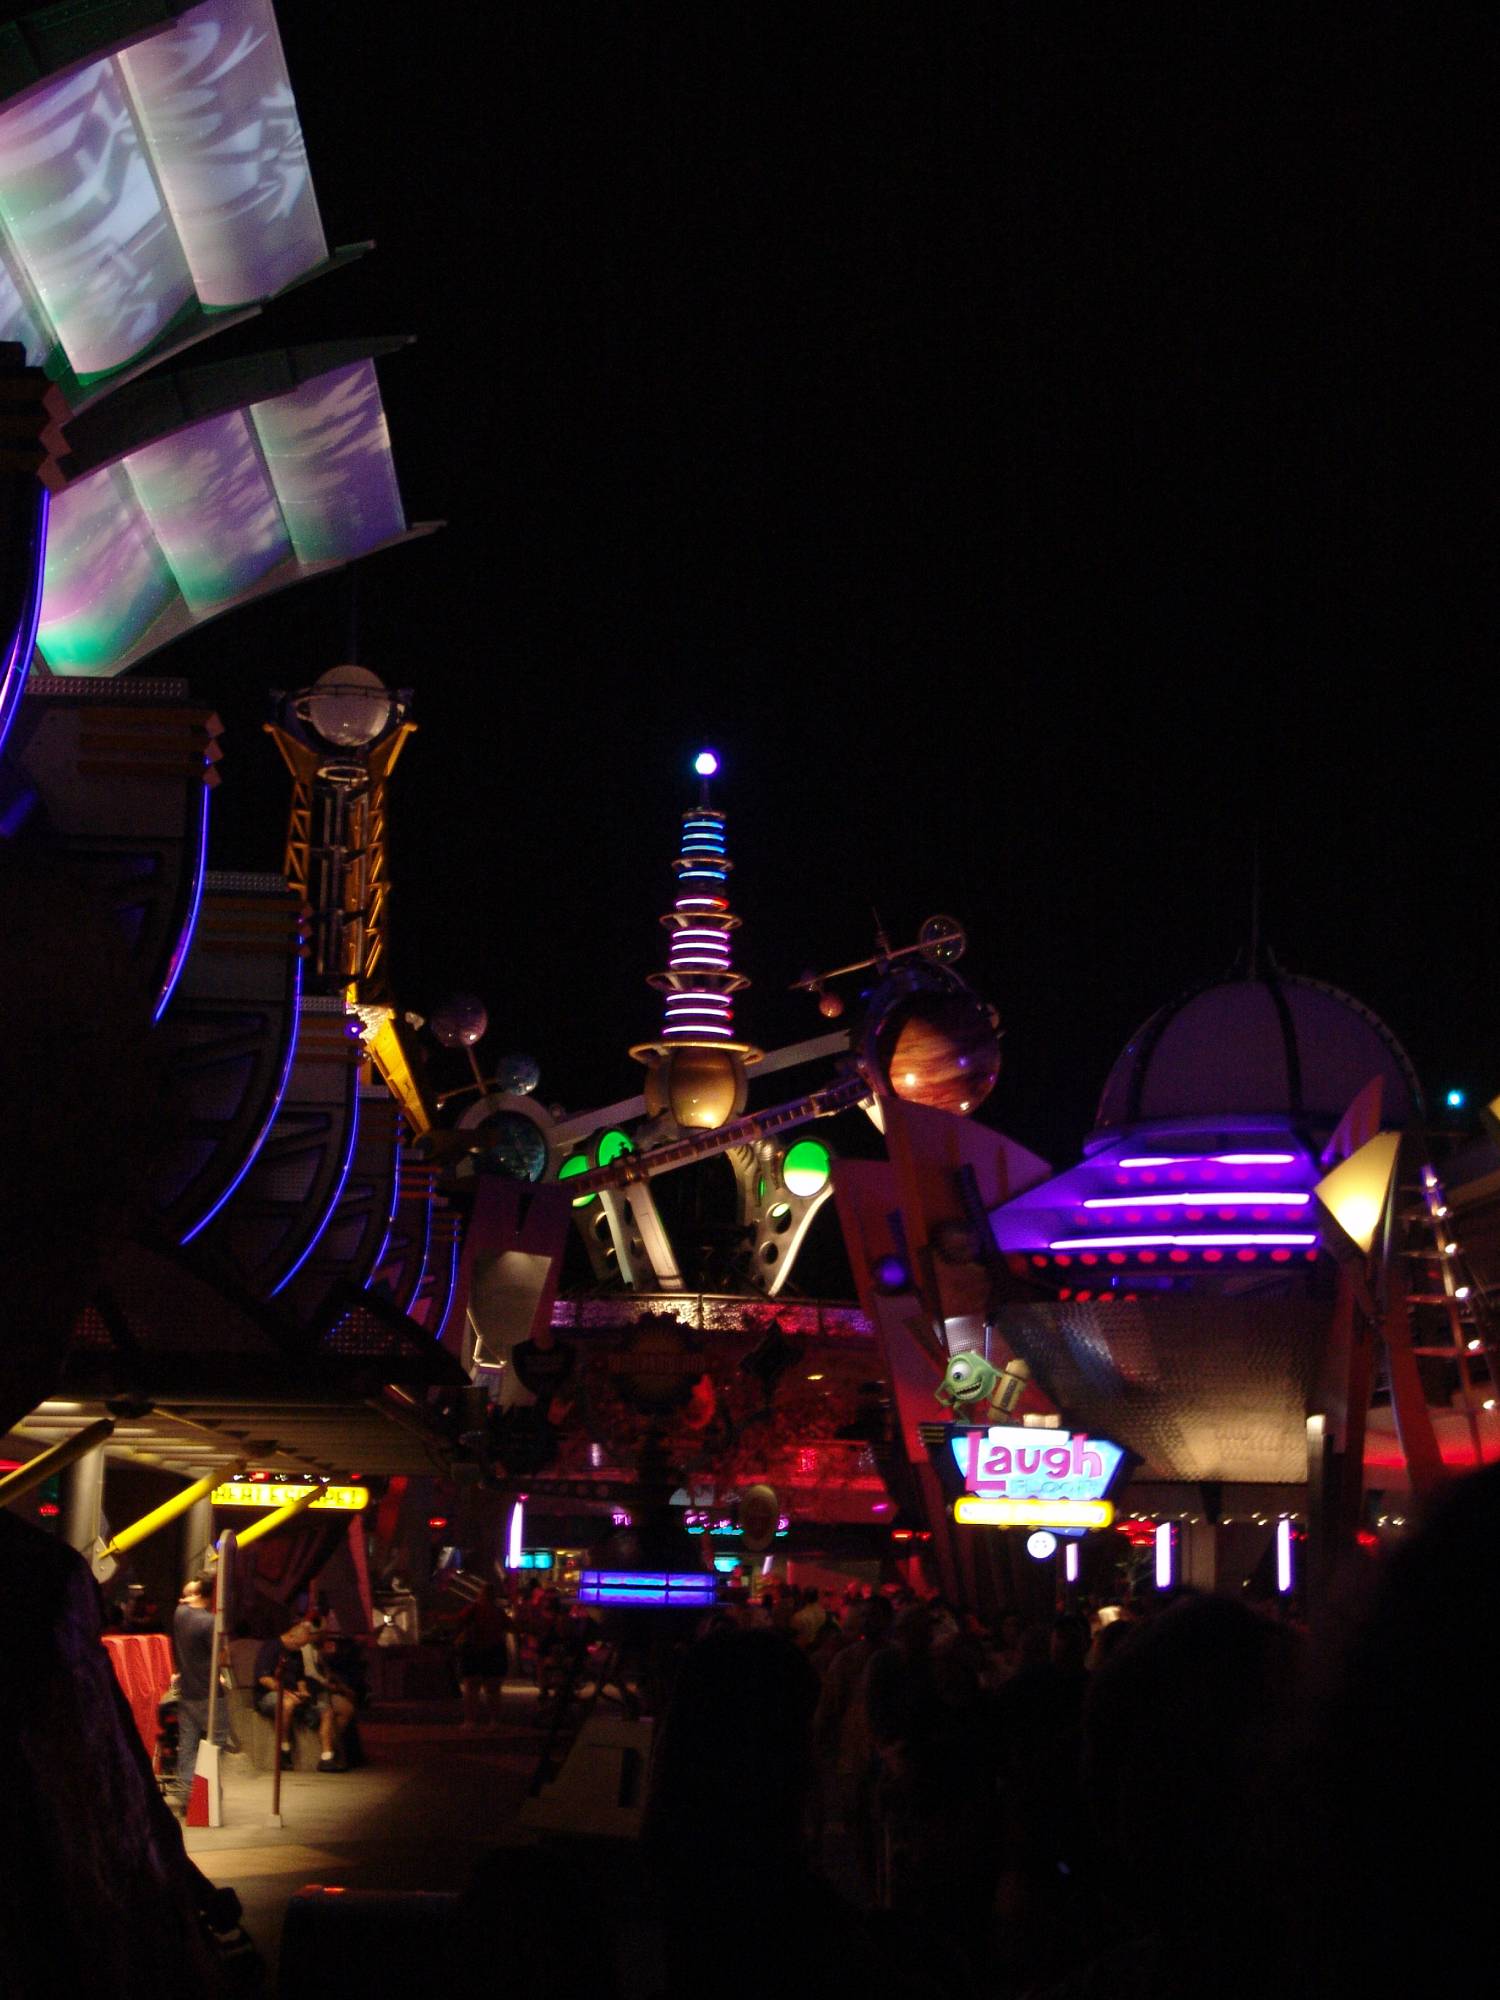 Magic Kingdom - Tomorrowland at night